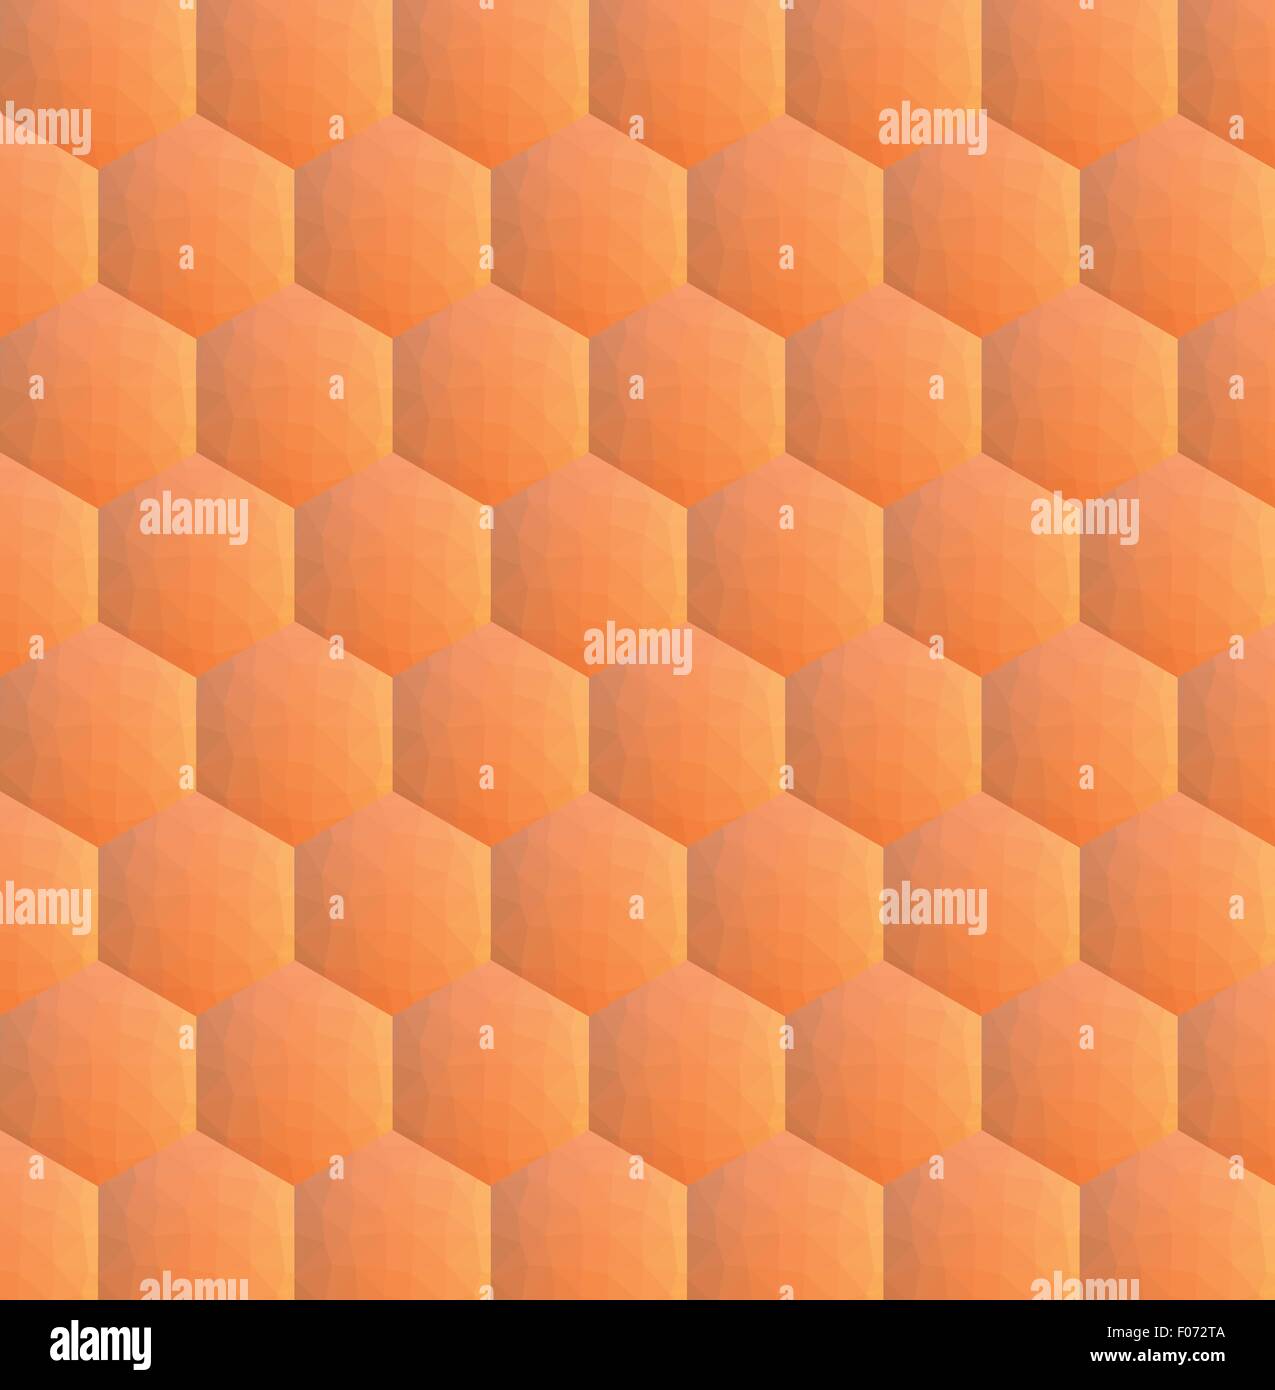 orange hexagonal low polygon background vector illustration Stock Vector